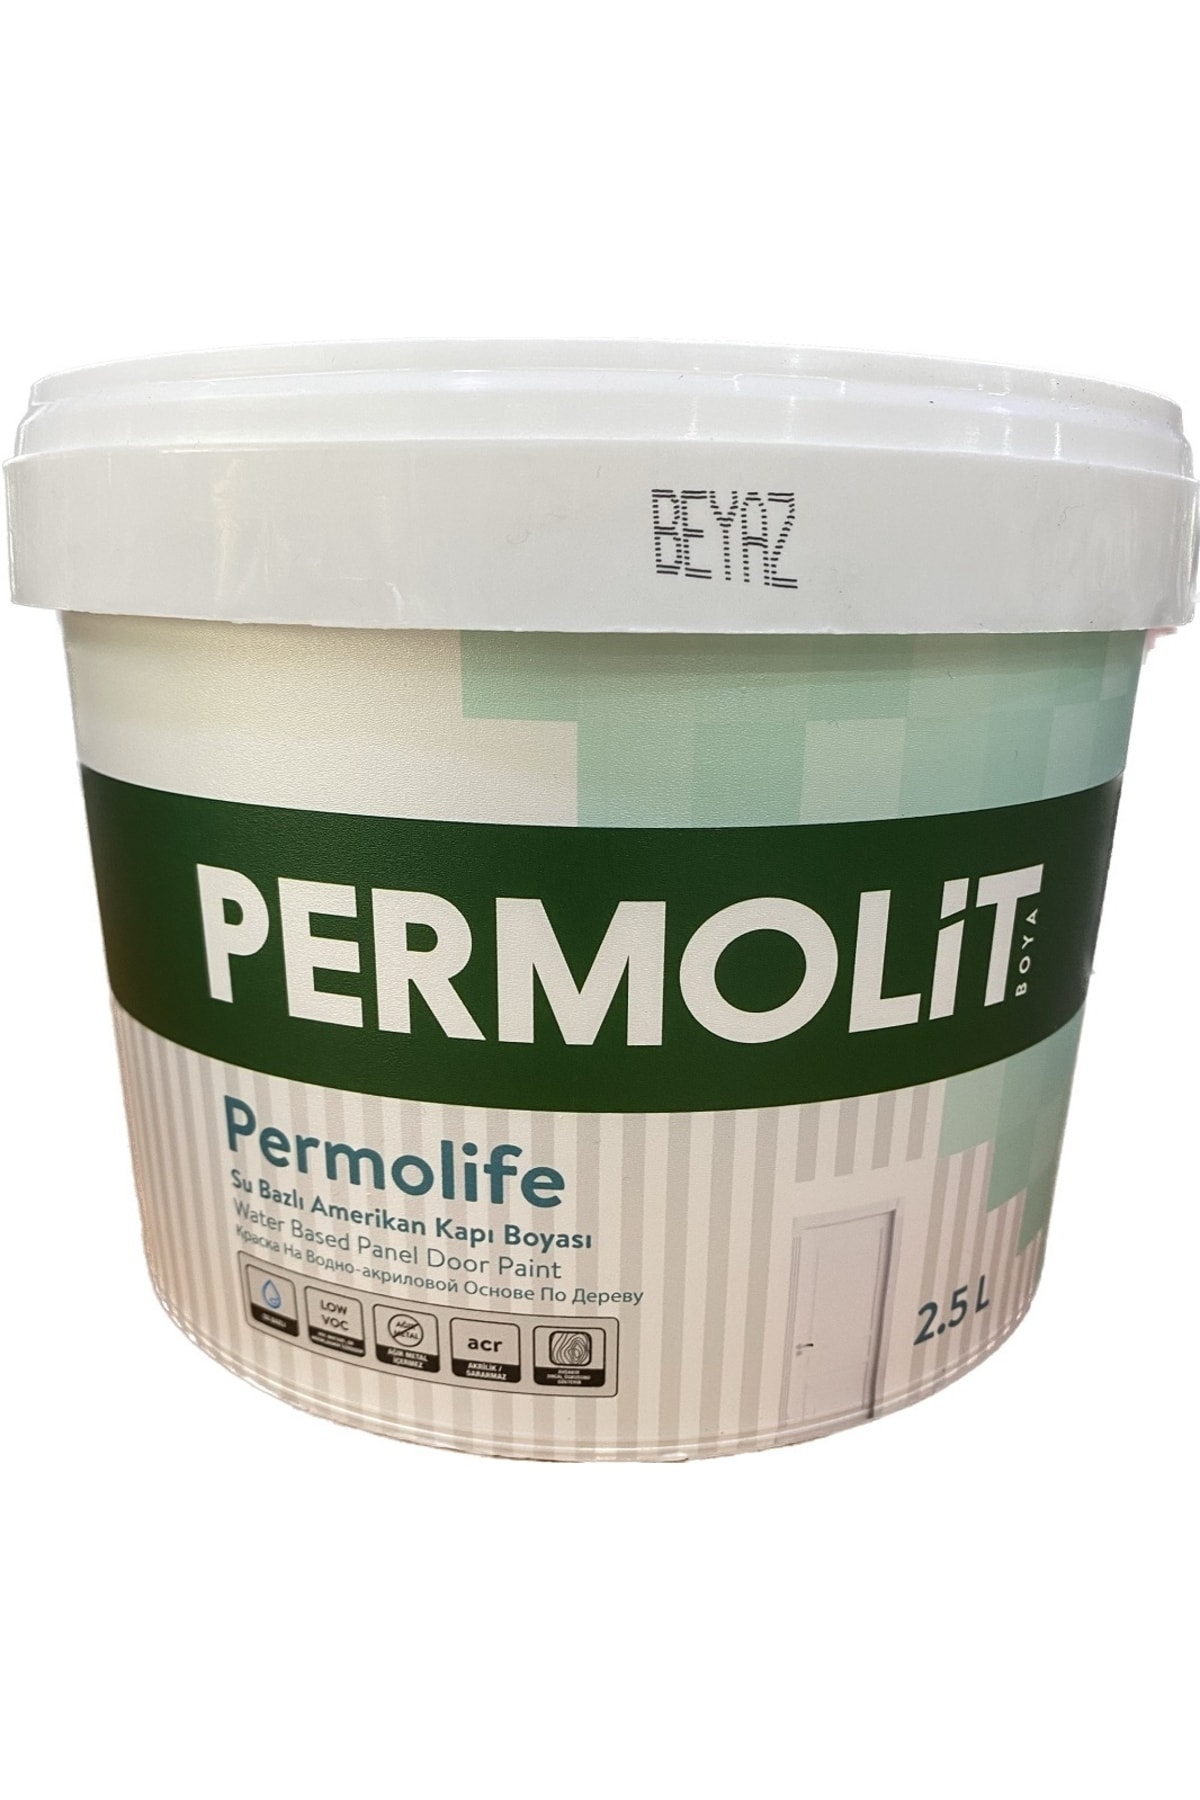 Permolit Permolife Su Bazlı Amerikan Panel Kapı Boyası Beyaz 2.5 lt Beyaz